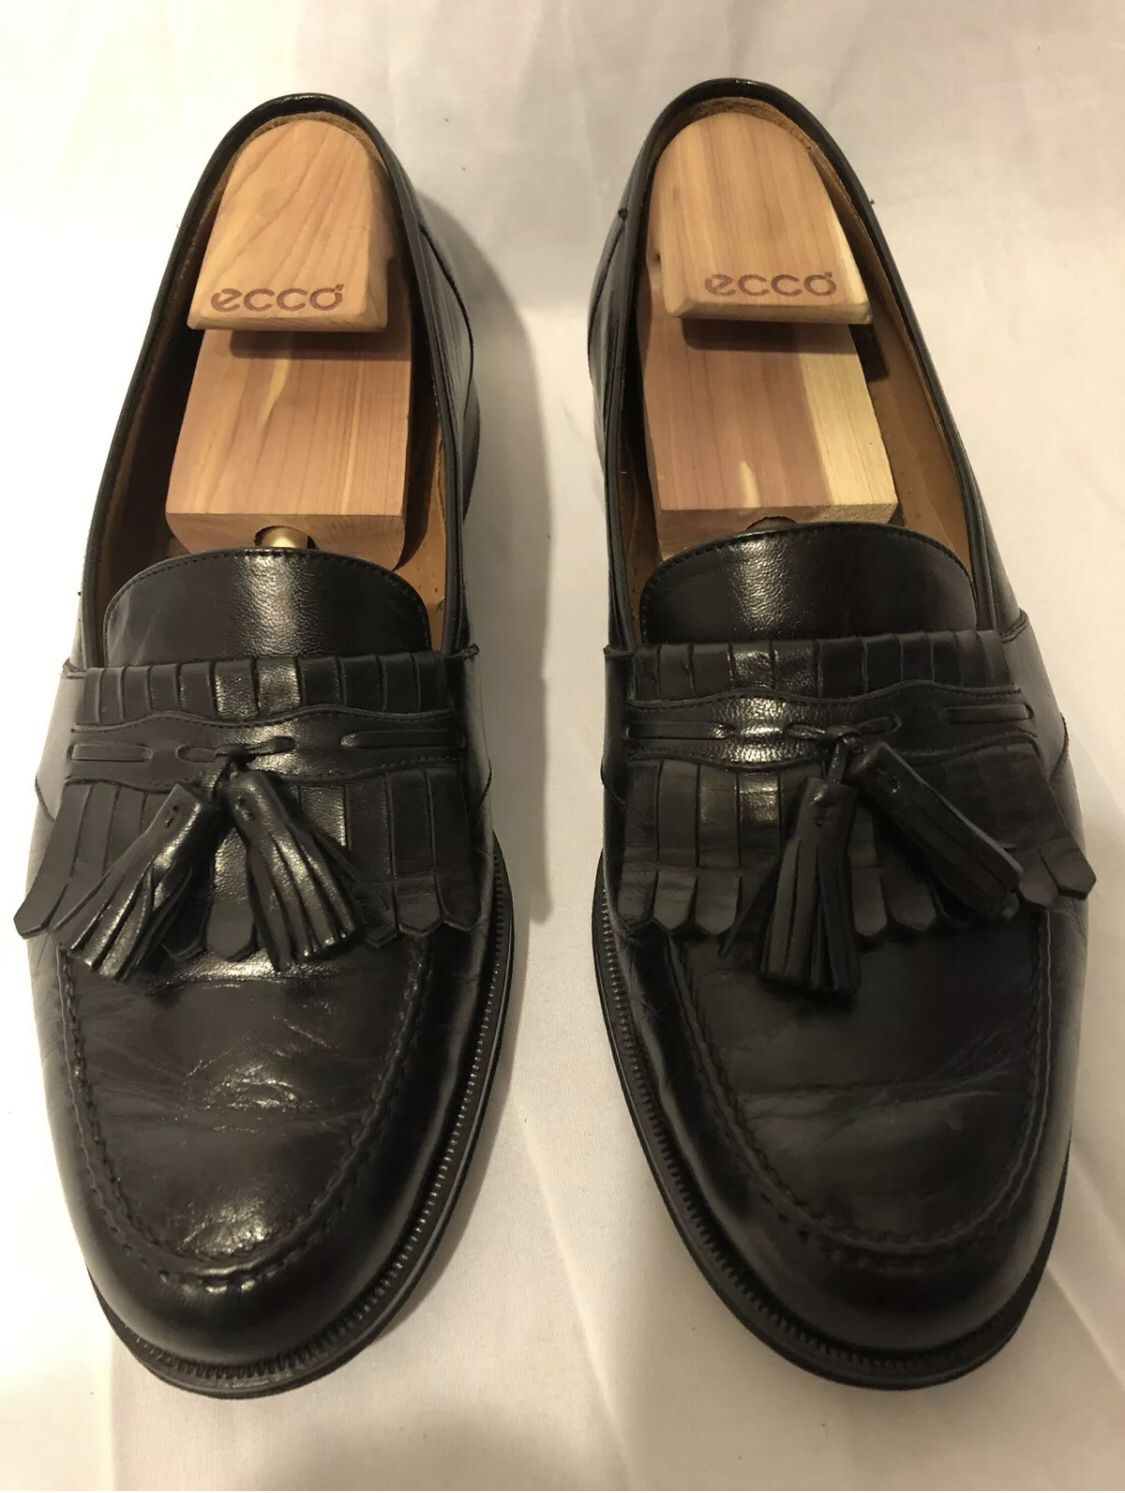 Magnanni 9341 Black Leather Loafers Kilt Tassel Men's Dress Shoe Size 10.5 M